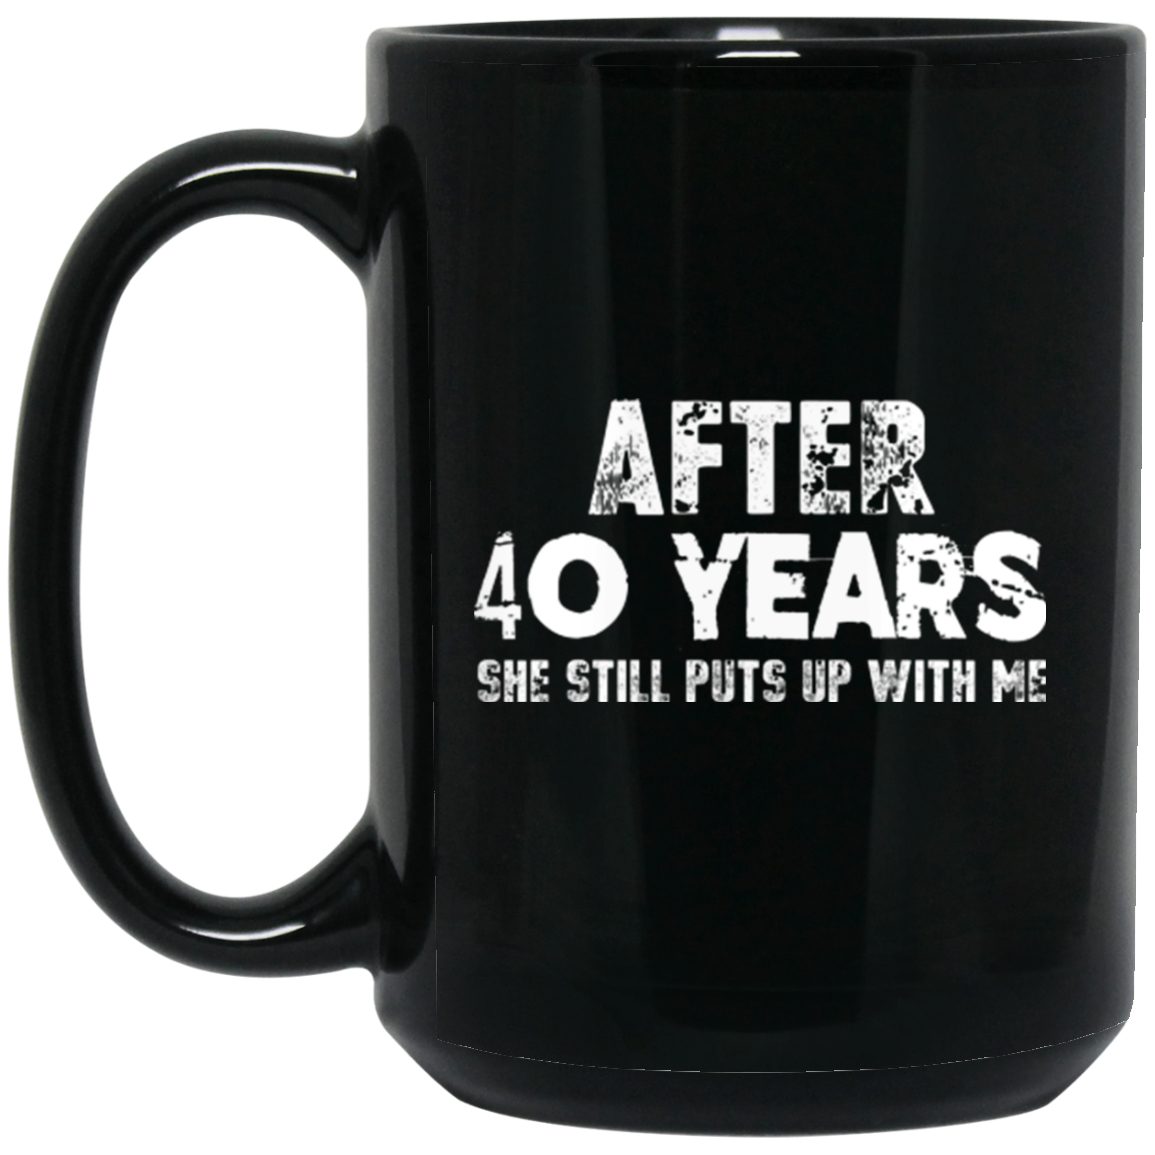 Anniversary Mug for Husband 40 Years Black Coffee Mugs - GoneBold.gift